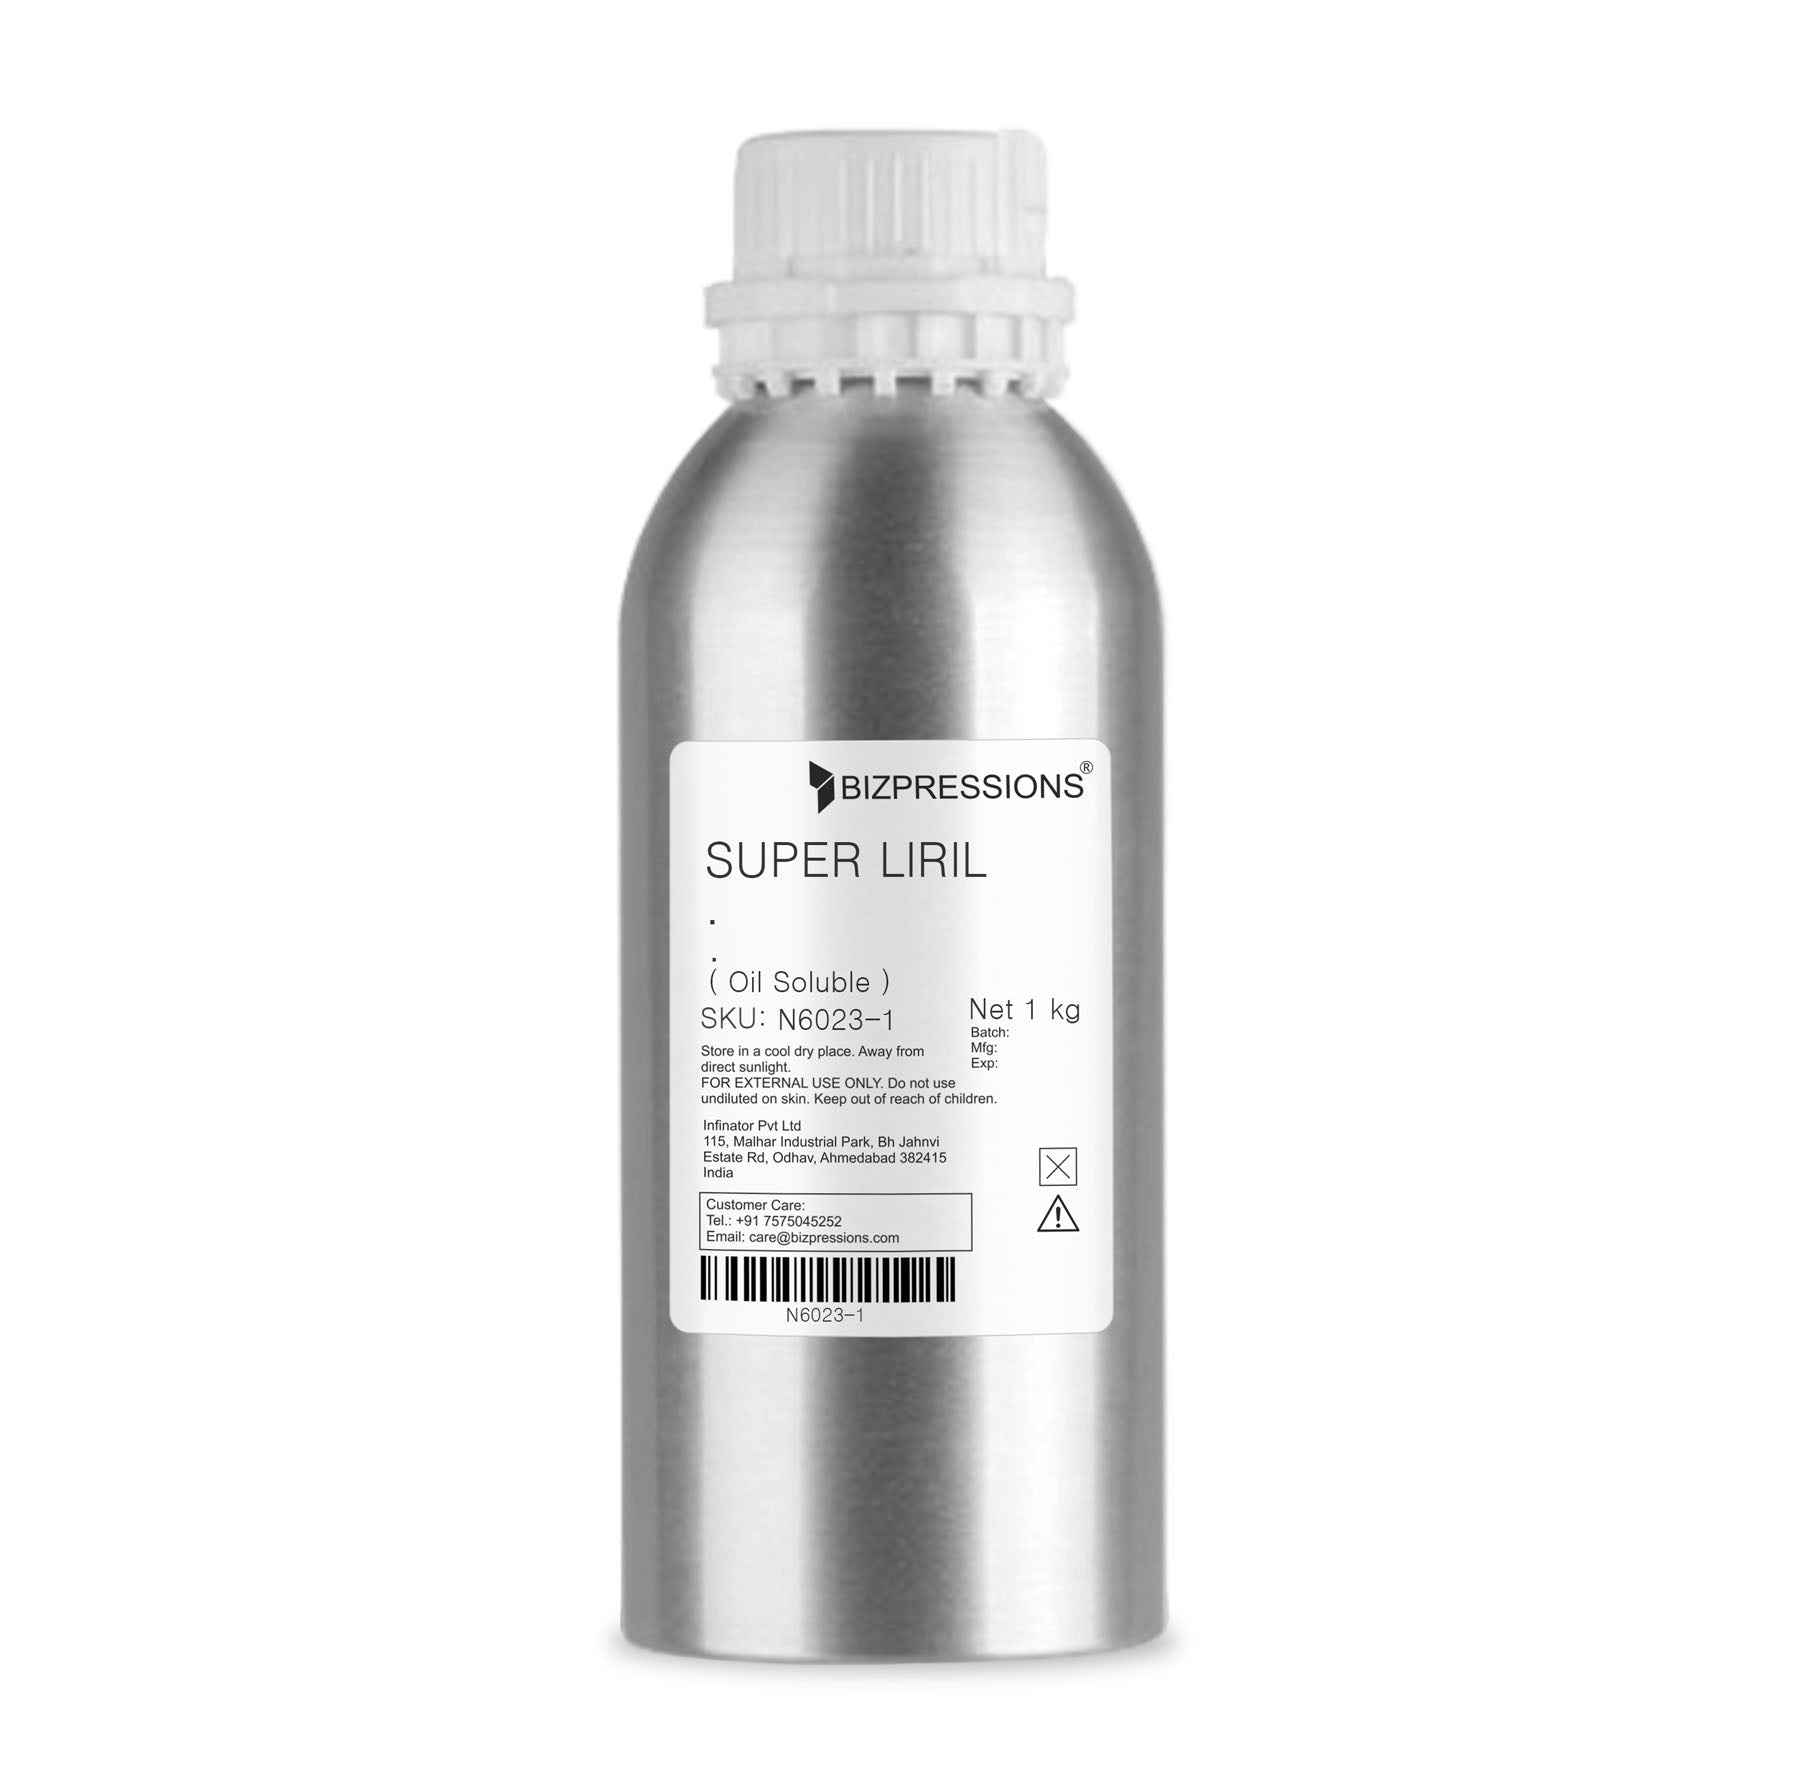 SUPER LIRIL - Fragrance ( Oil Soluble ) - 1 kg